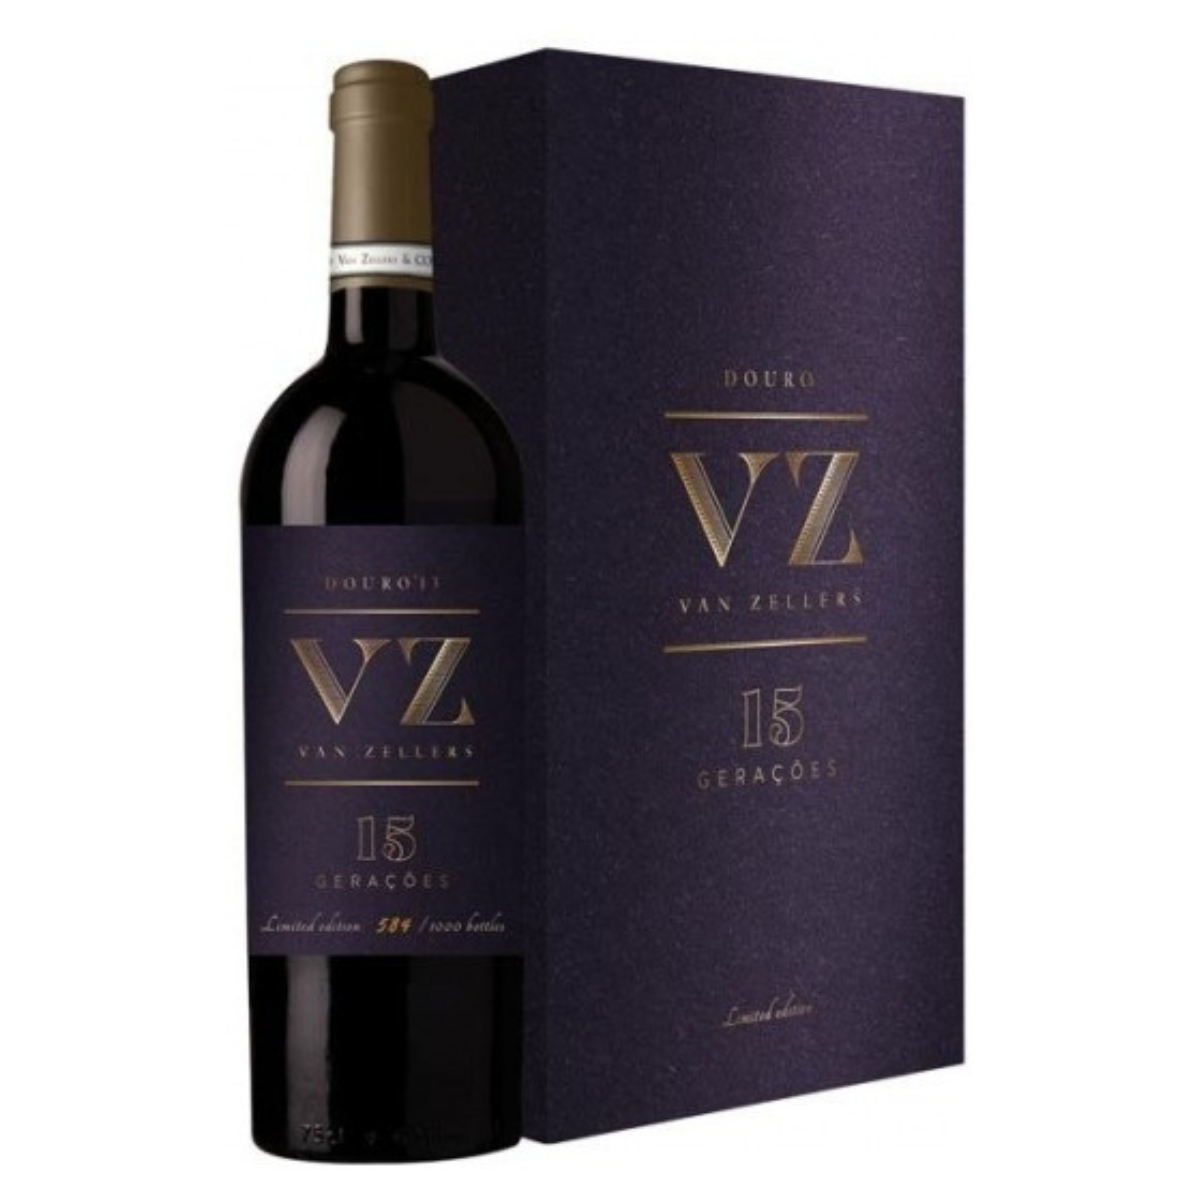 Vinho VZ Van Zellers 15 Gerações Tinto 2015 Conj. 2grfs